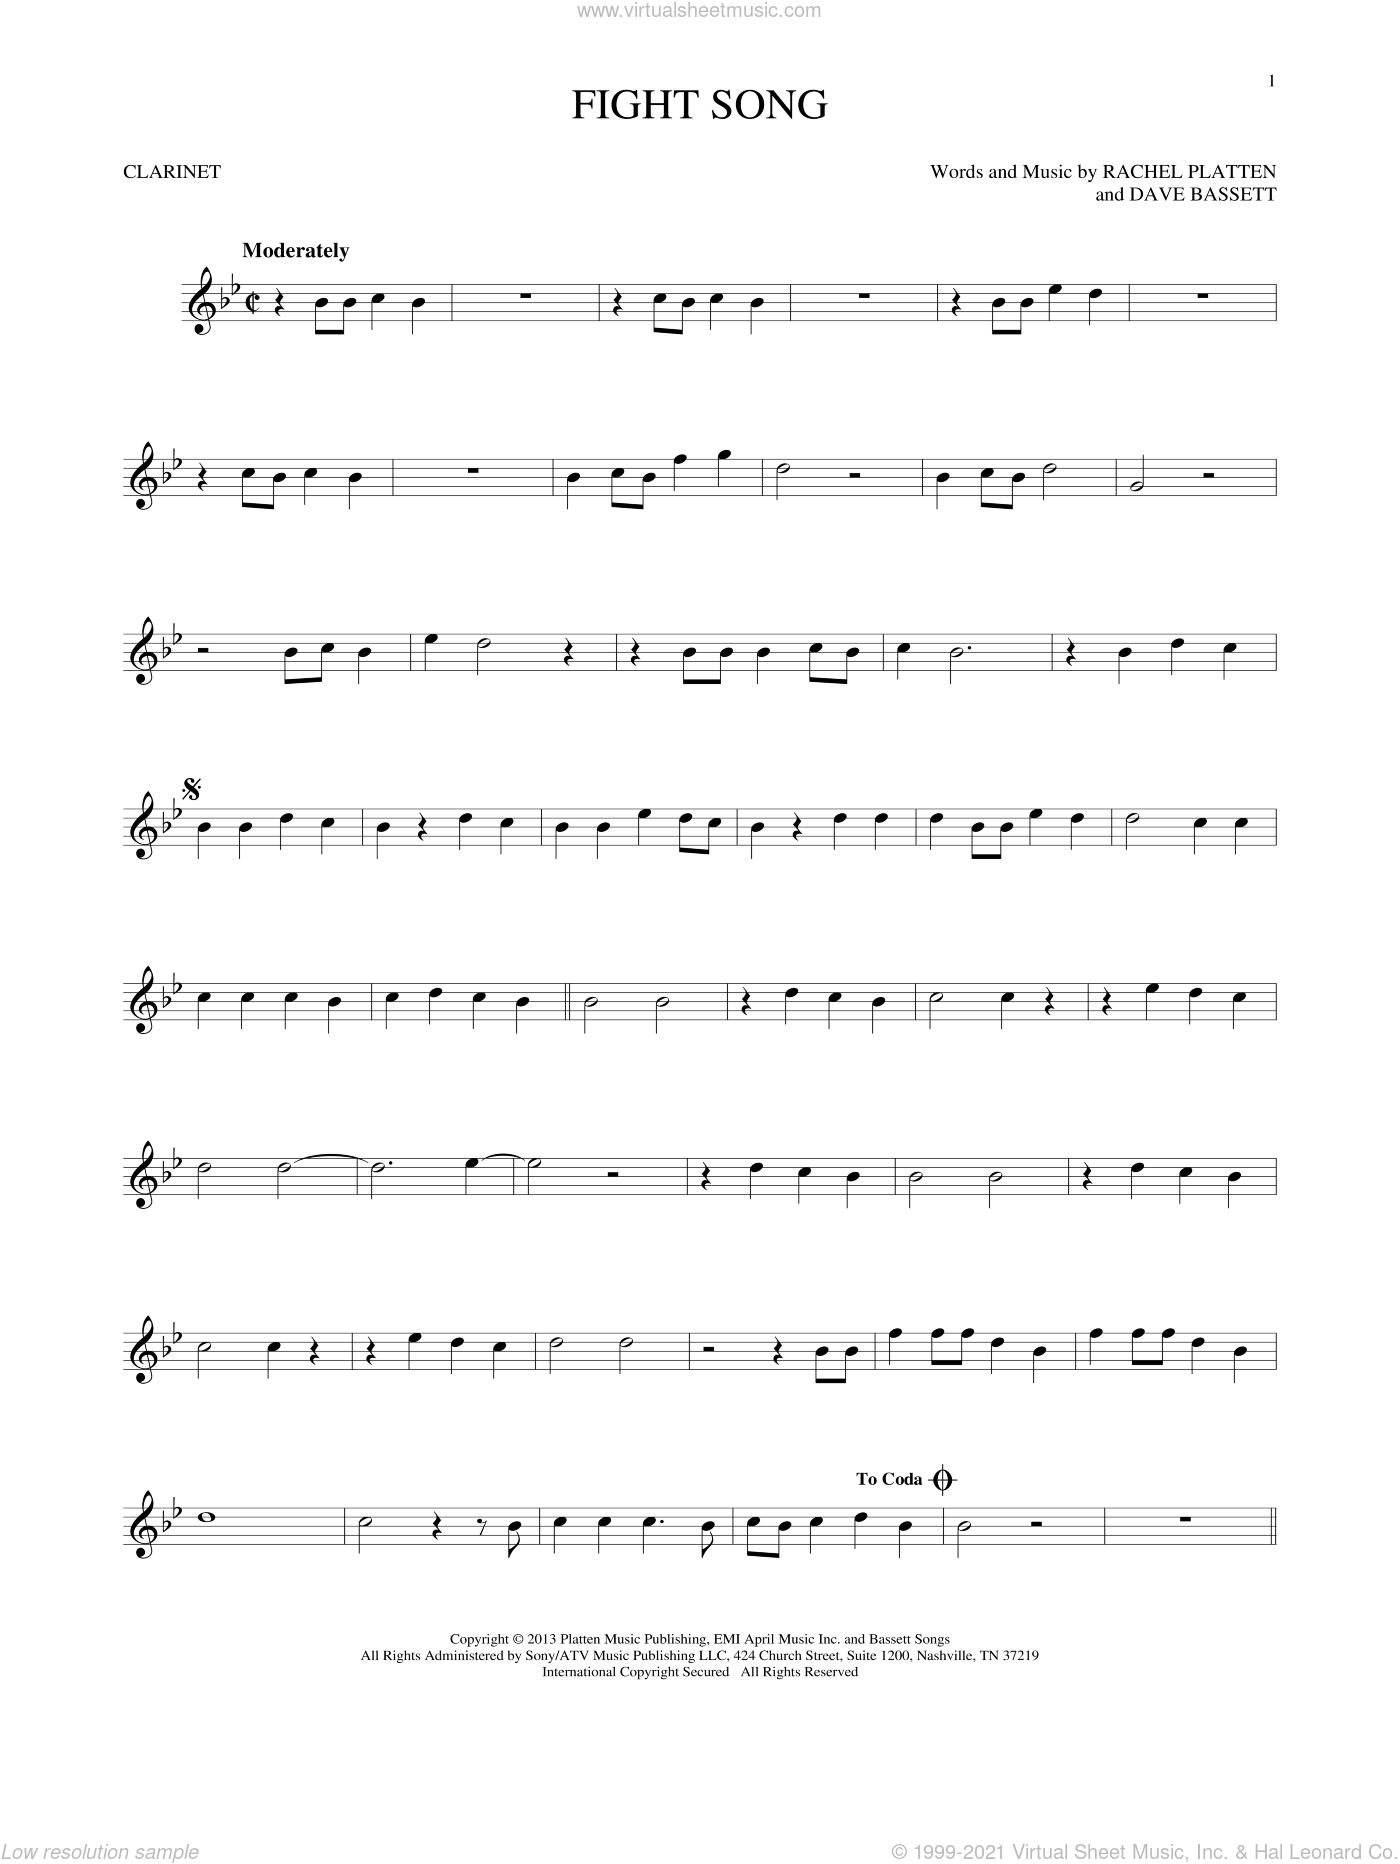 Rachel Platten "Fight Song" Sheet Music Notes | Download PDF Score Printable